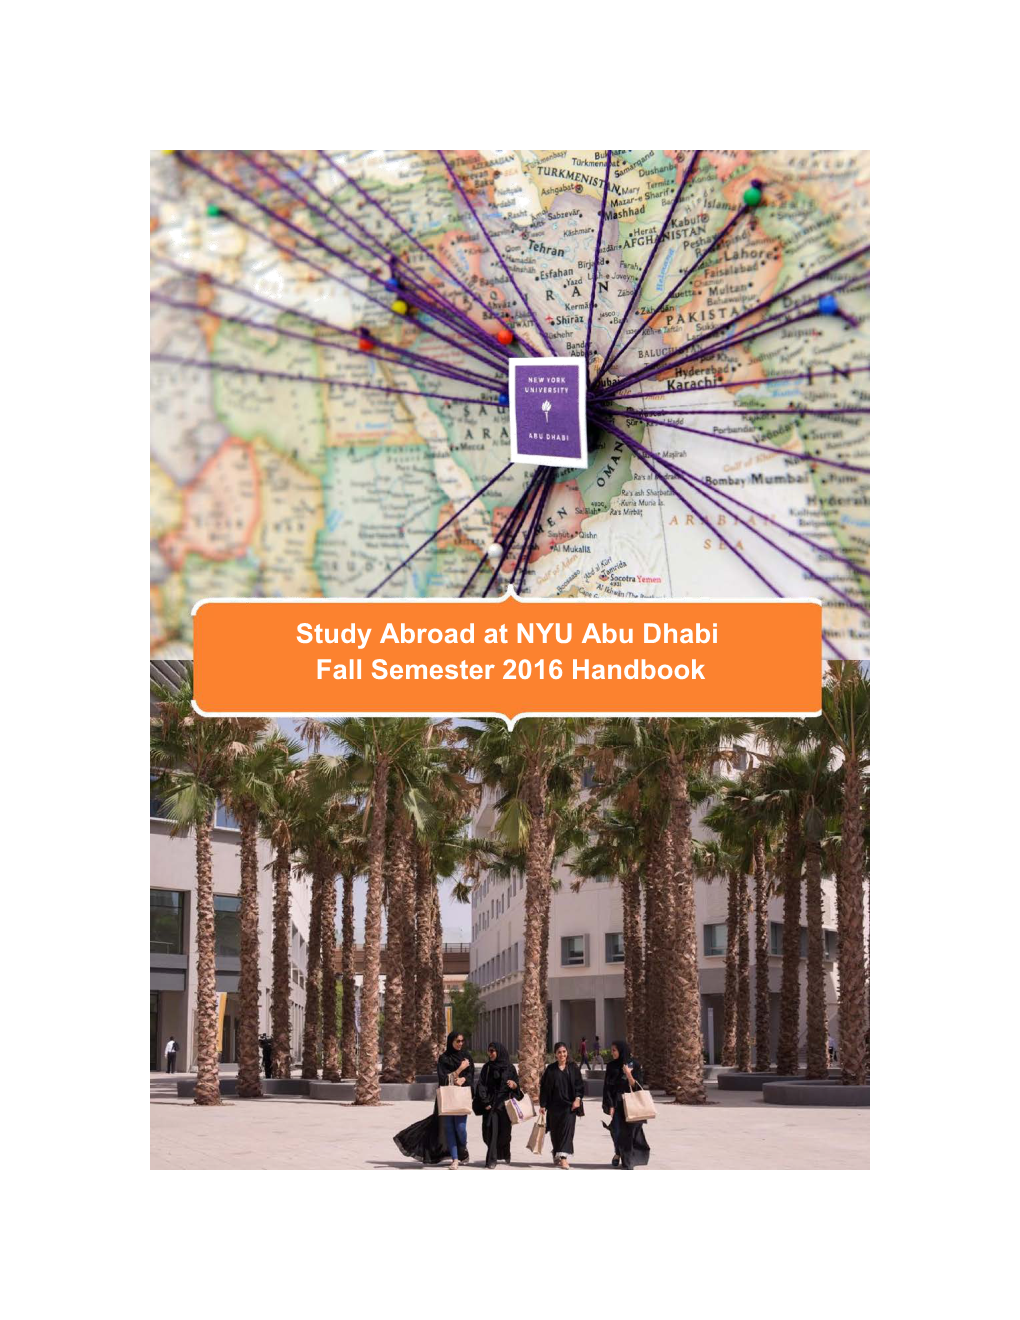 Study Abroad at NYU Abu Dhabi Fall Semester 2016 Handbook MAP of the UNITED ARAB EMIRATES